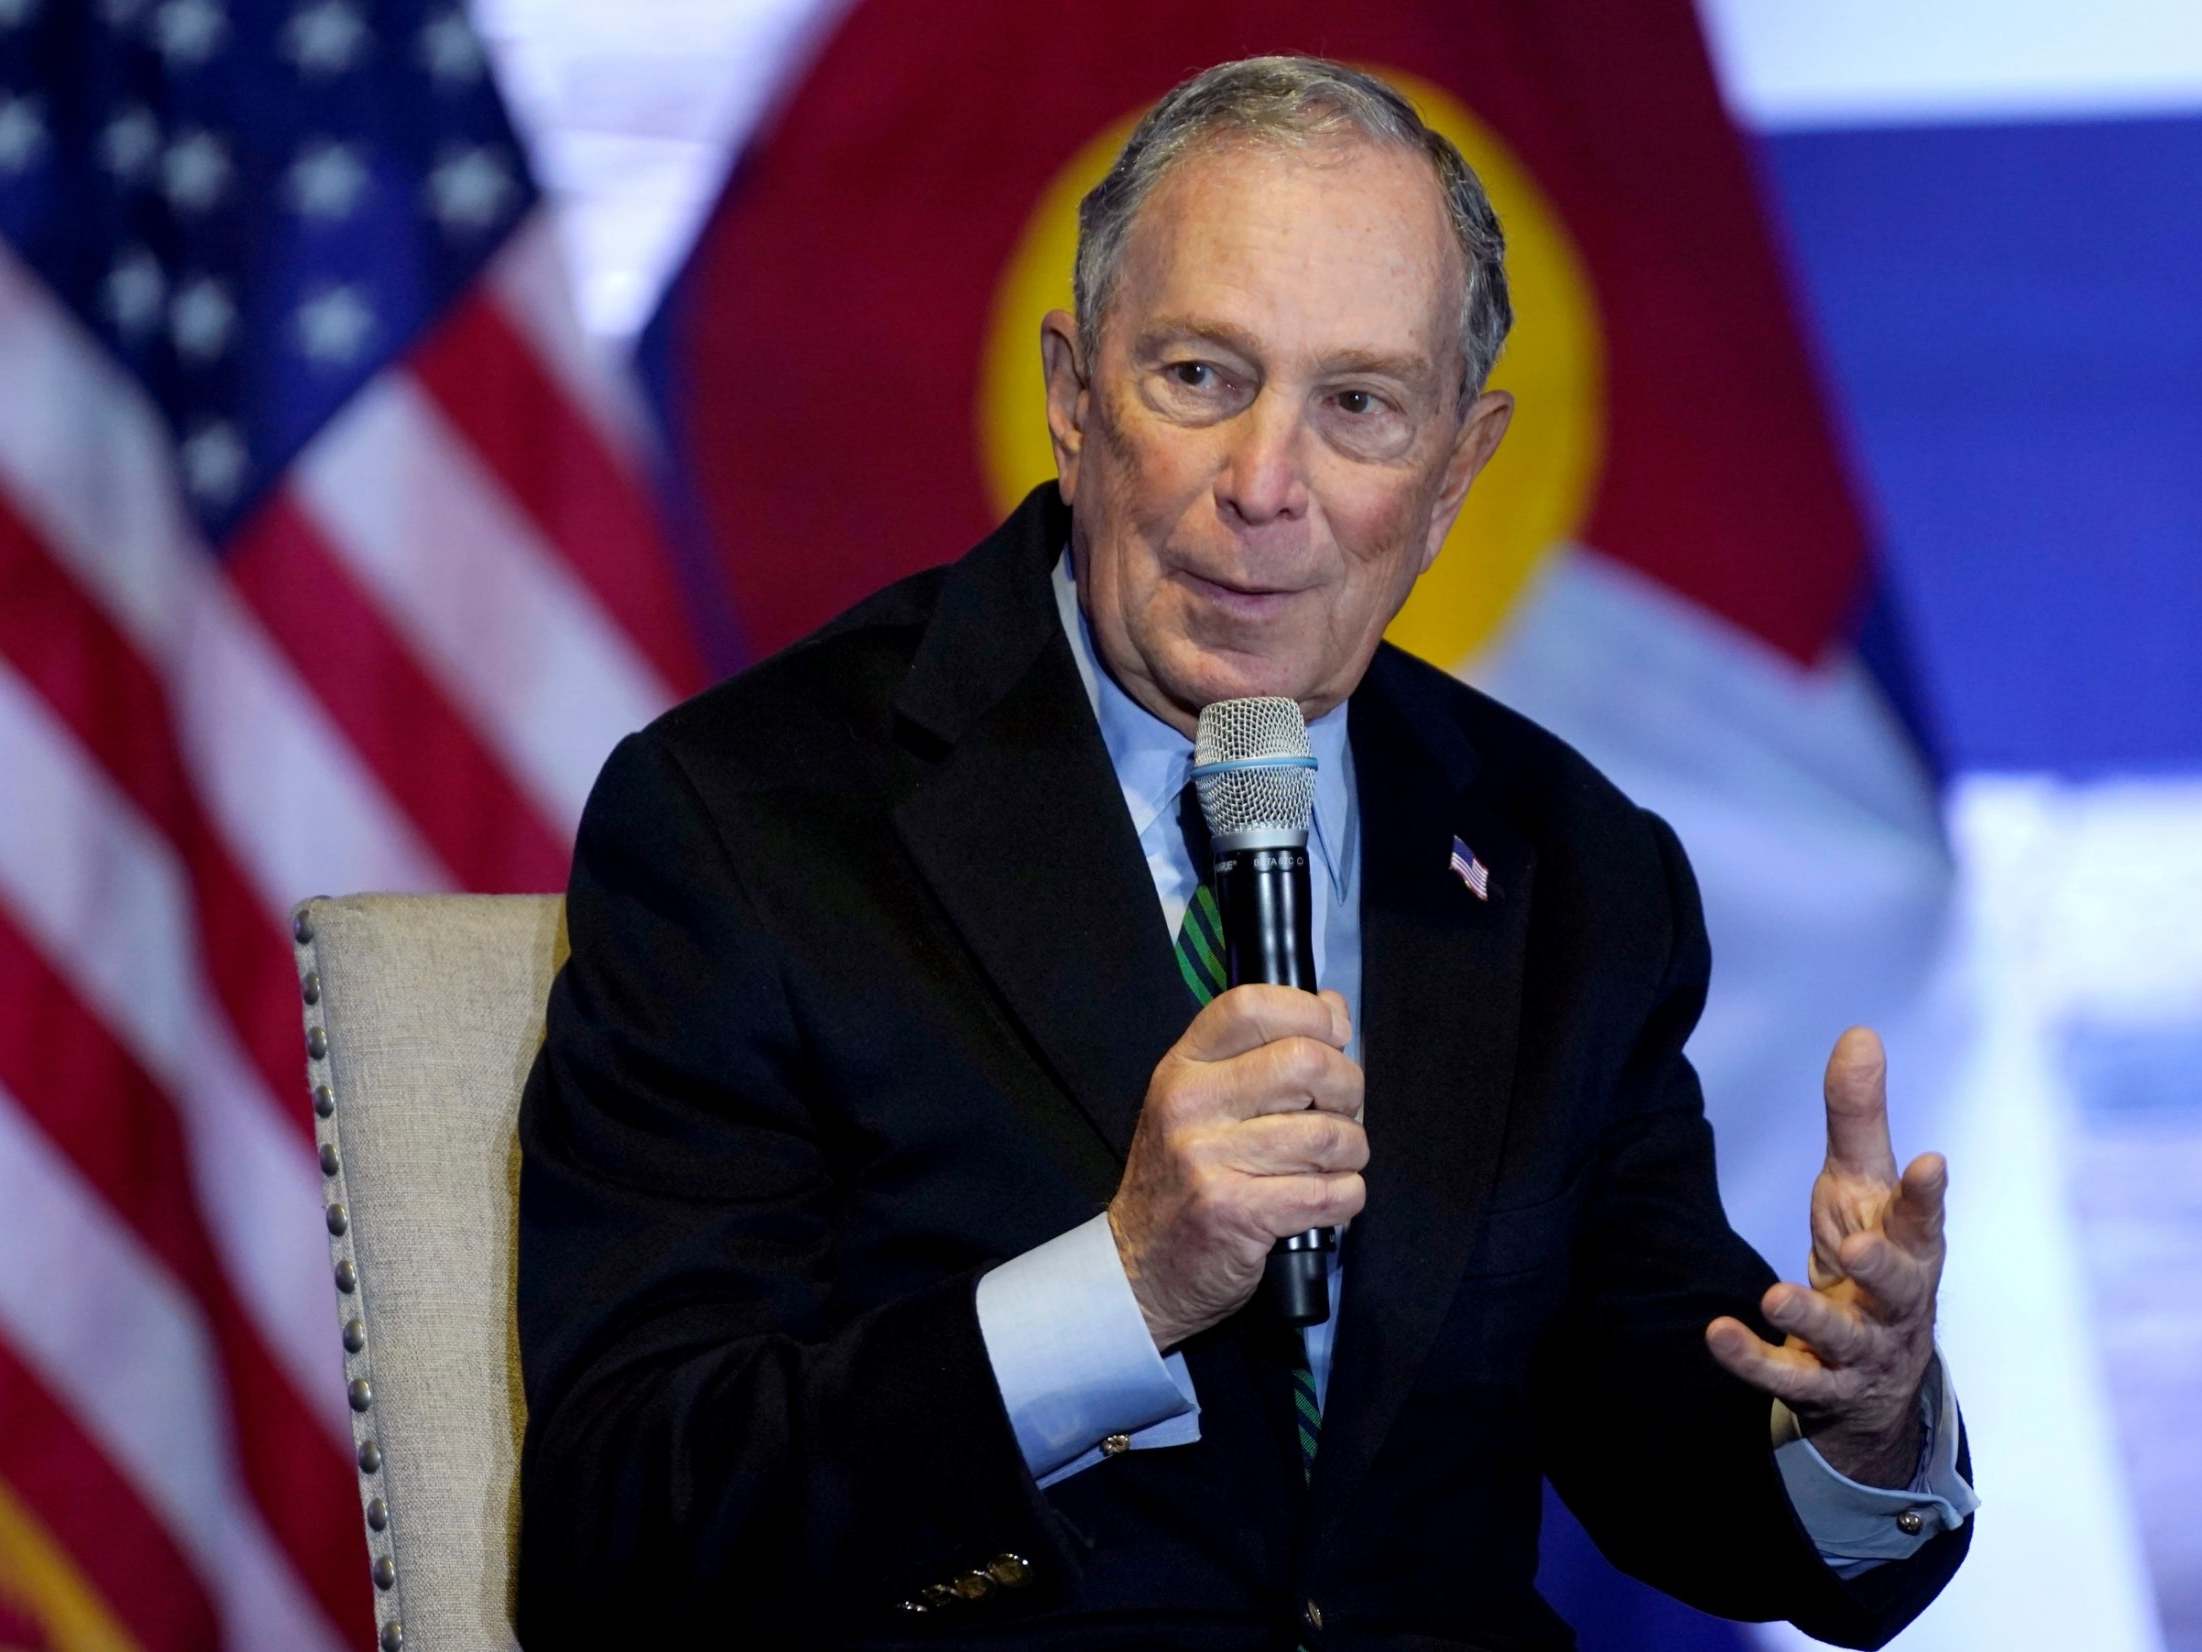 Michael Bloomberg speaks about his gun policy agenda in Aurora, Colorado in December